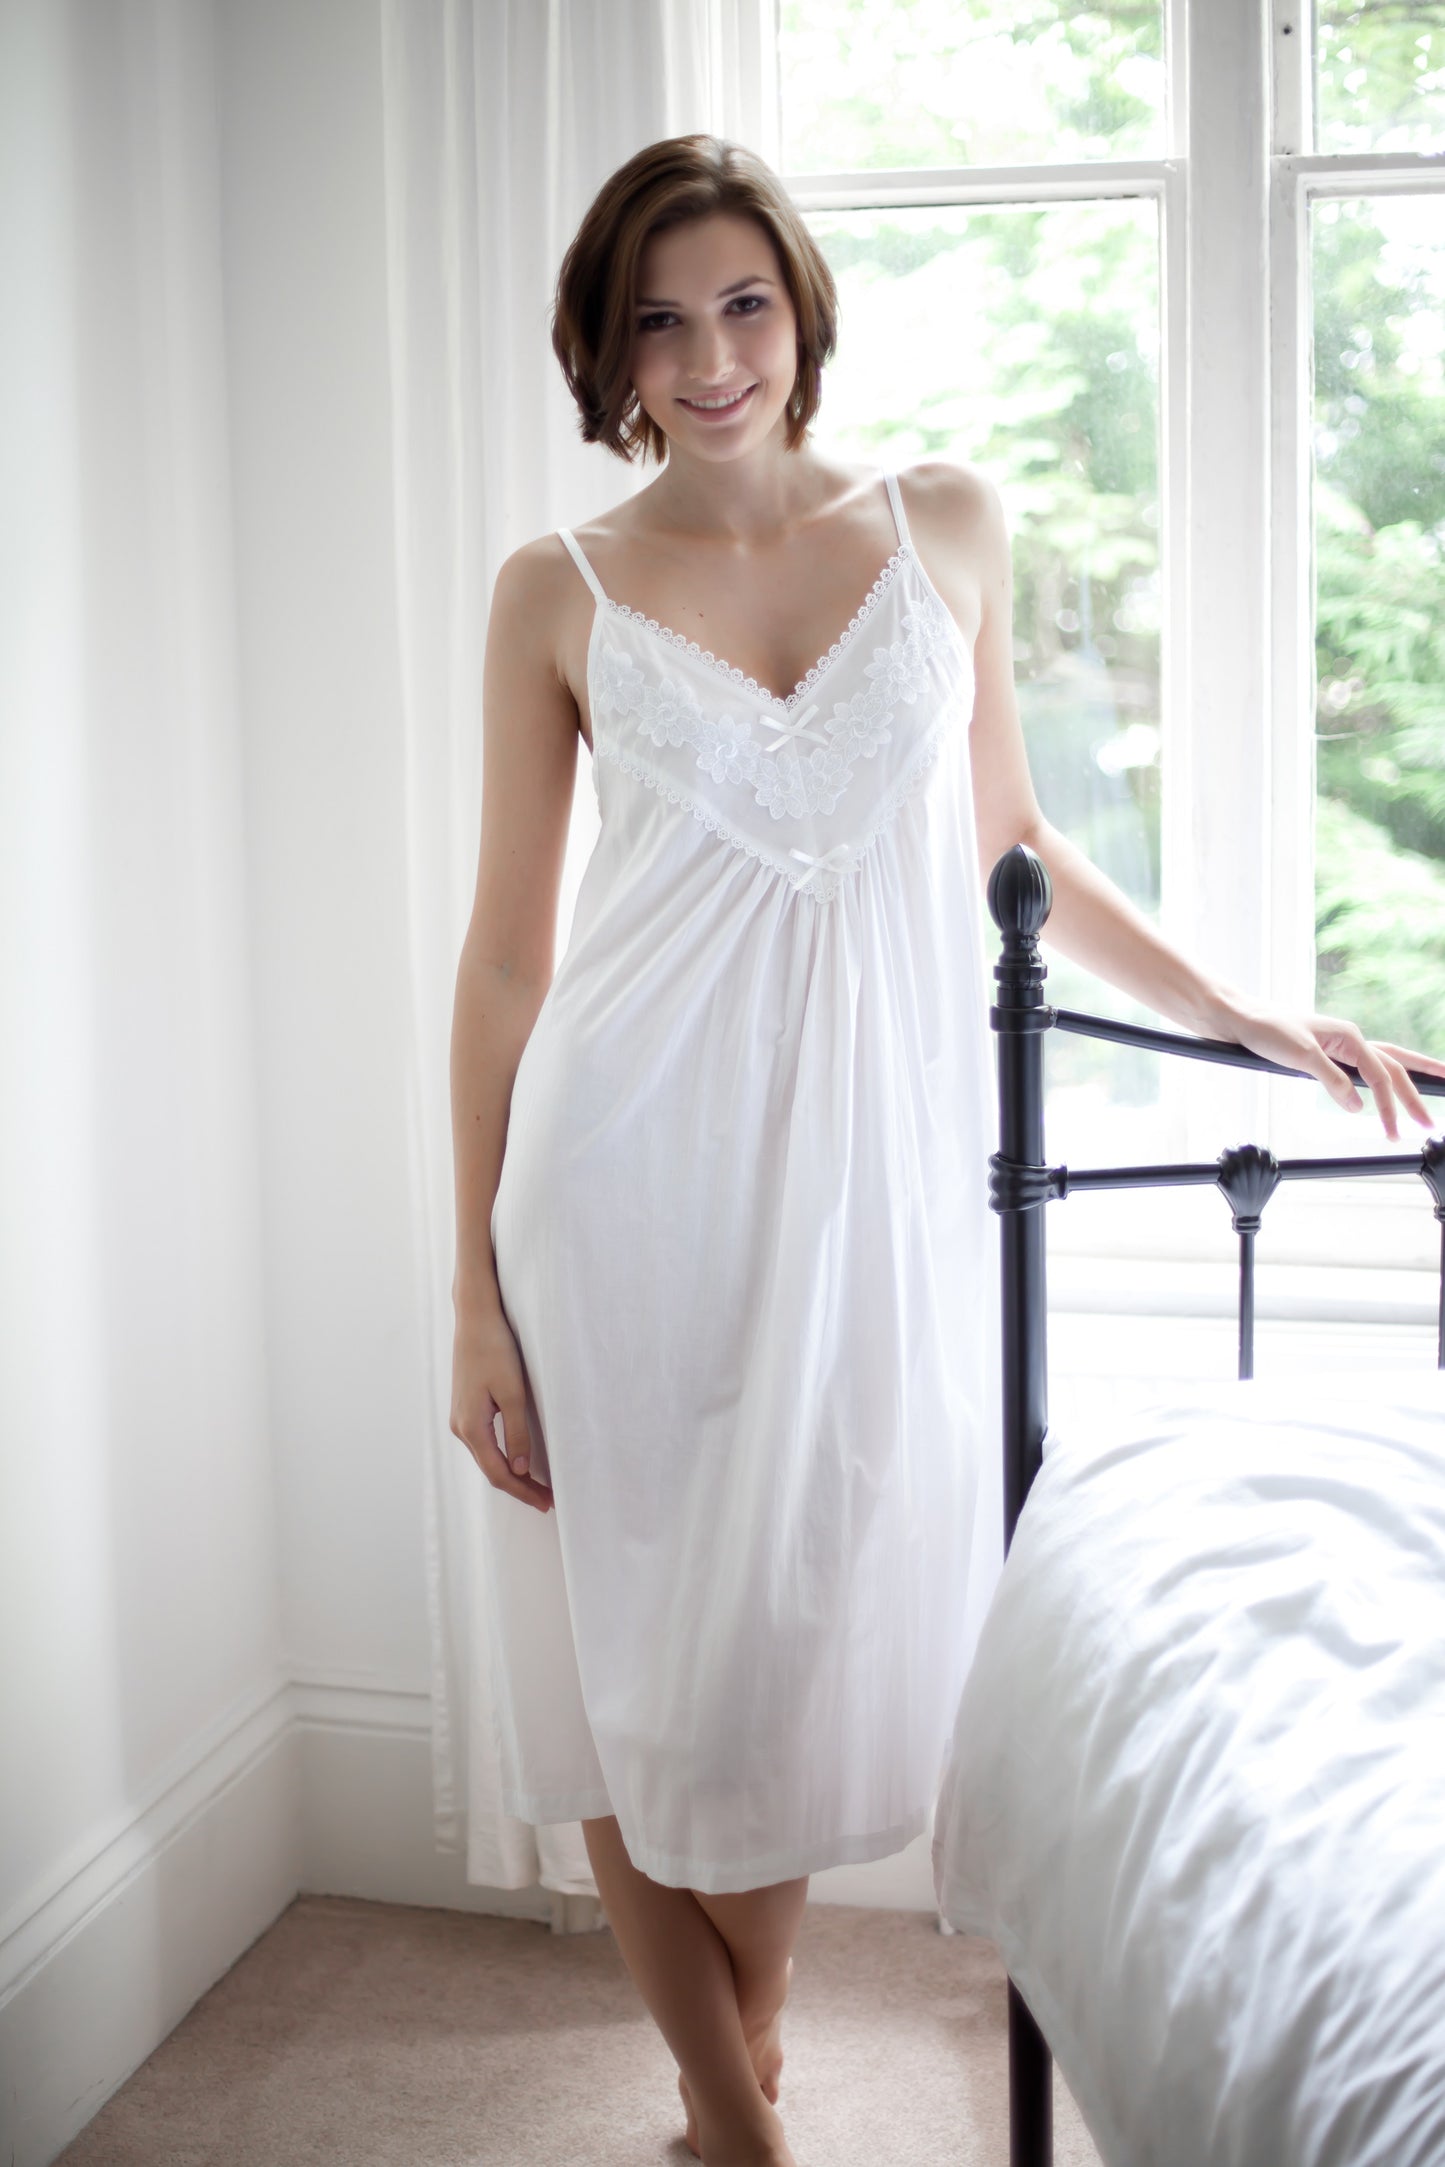 Cottonreal 'Helga' White Cotton Strappy Nightdress